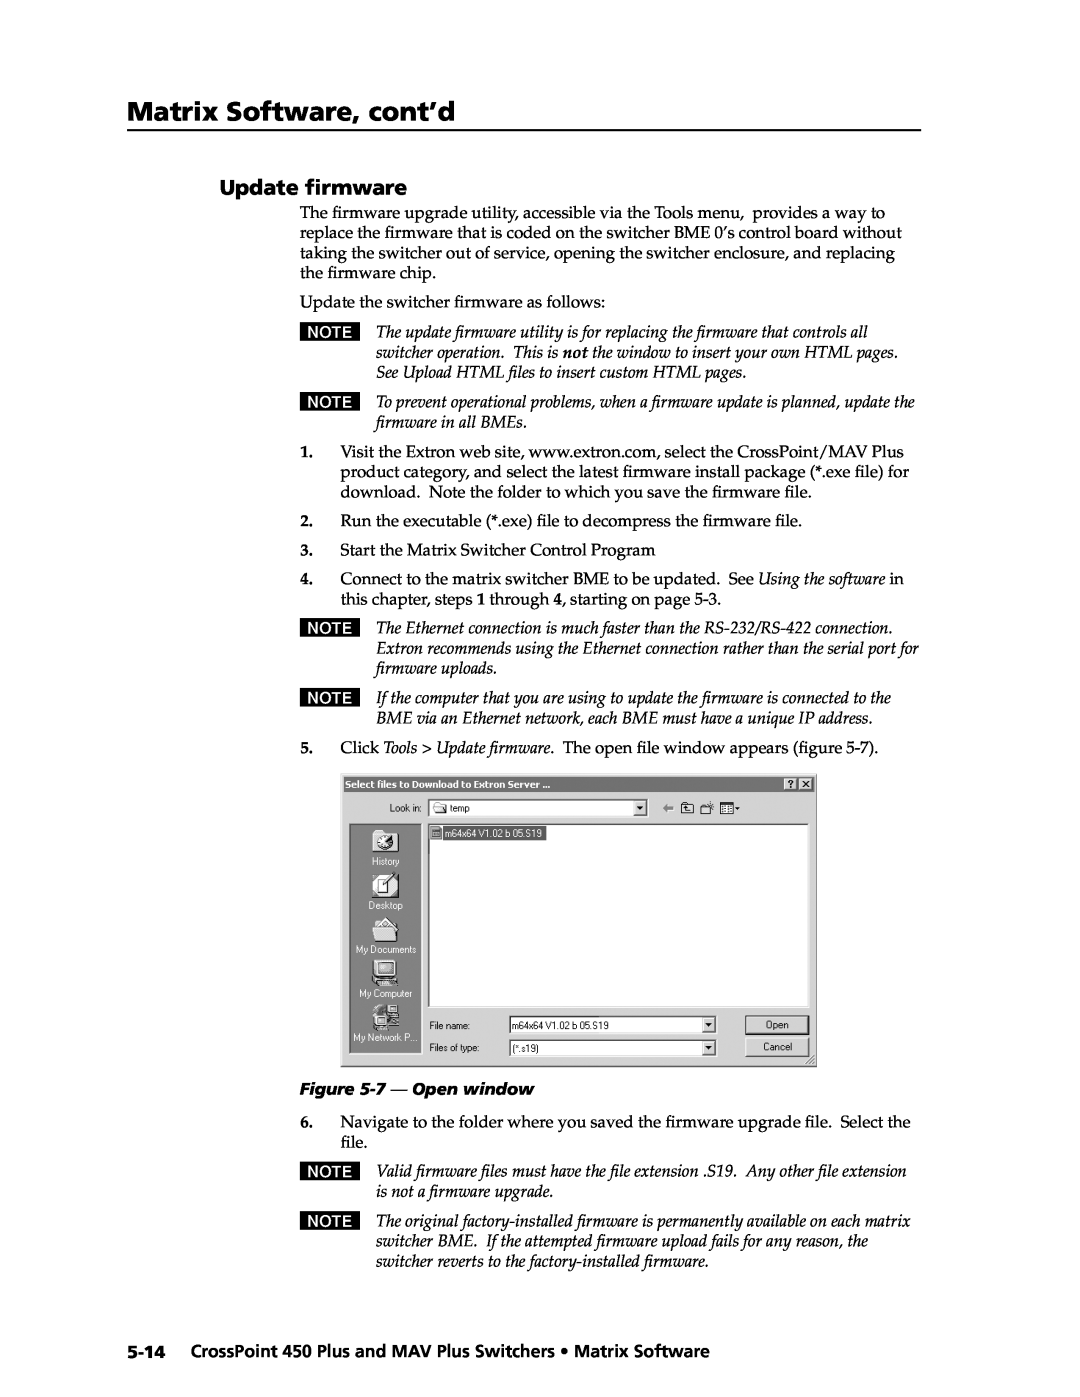 Extron electronic MAV Plus, 450 Plus manual Update ﬁrmware, Matrix Software, cont’d, 7 - Open window 